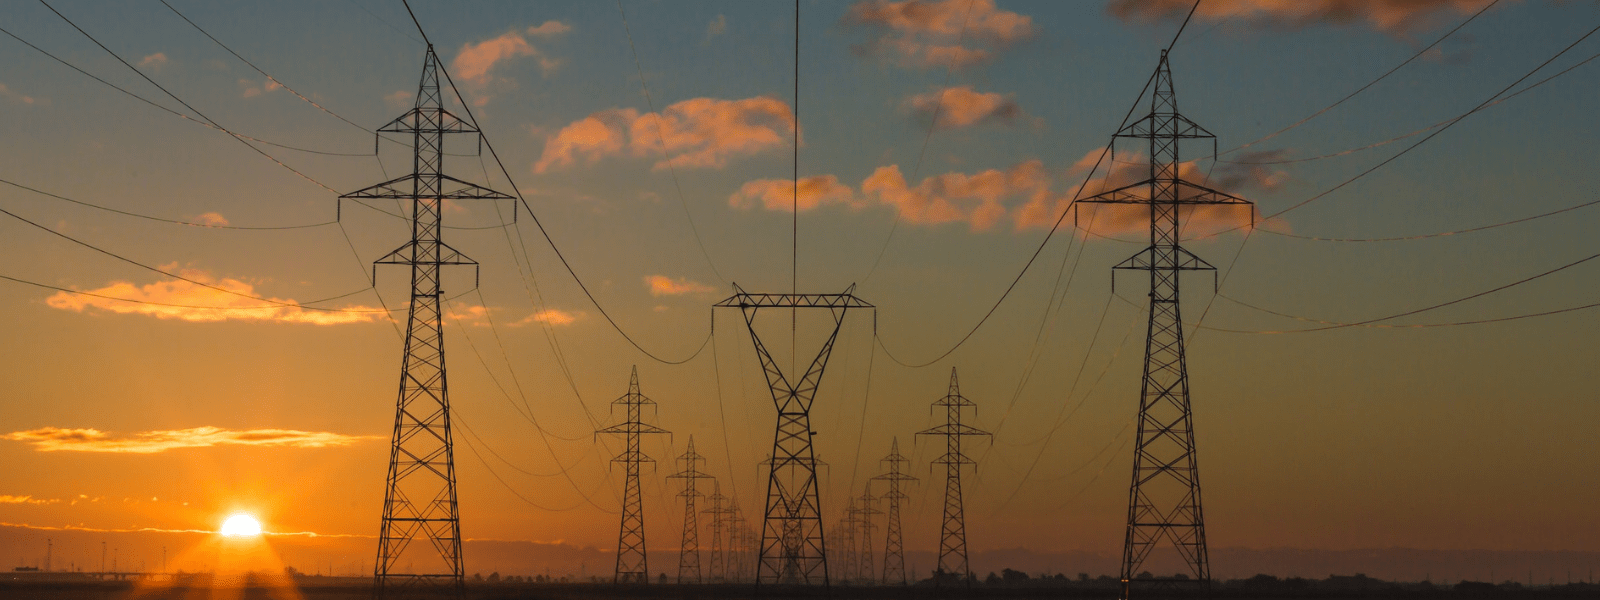 Transmission lines at sunset